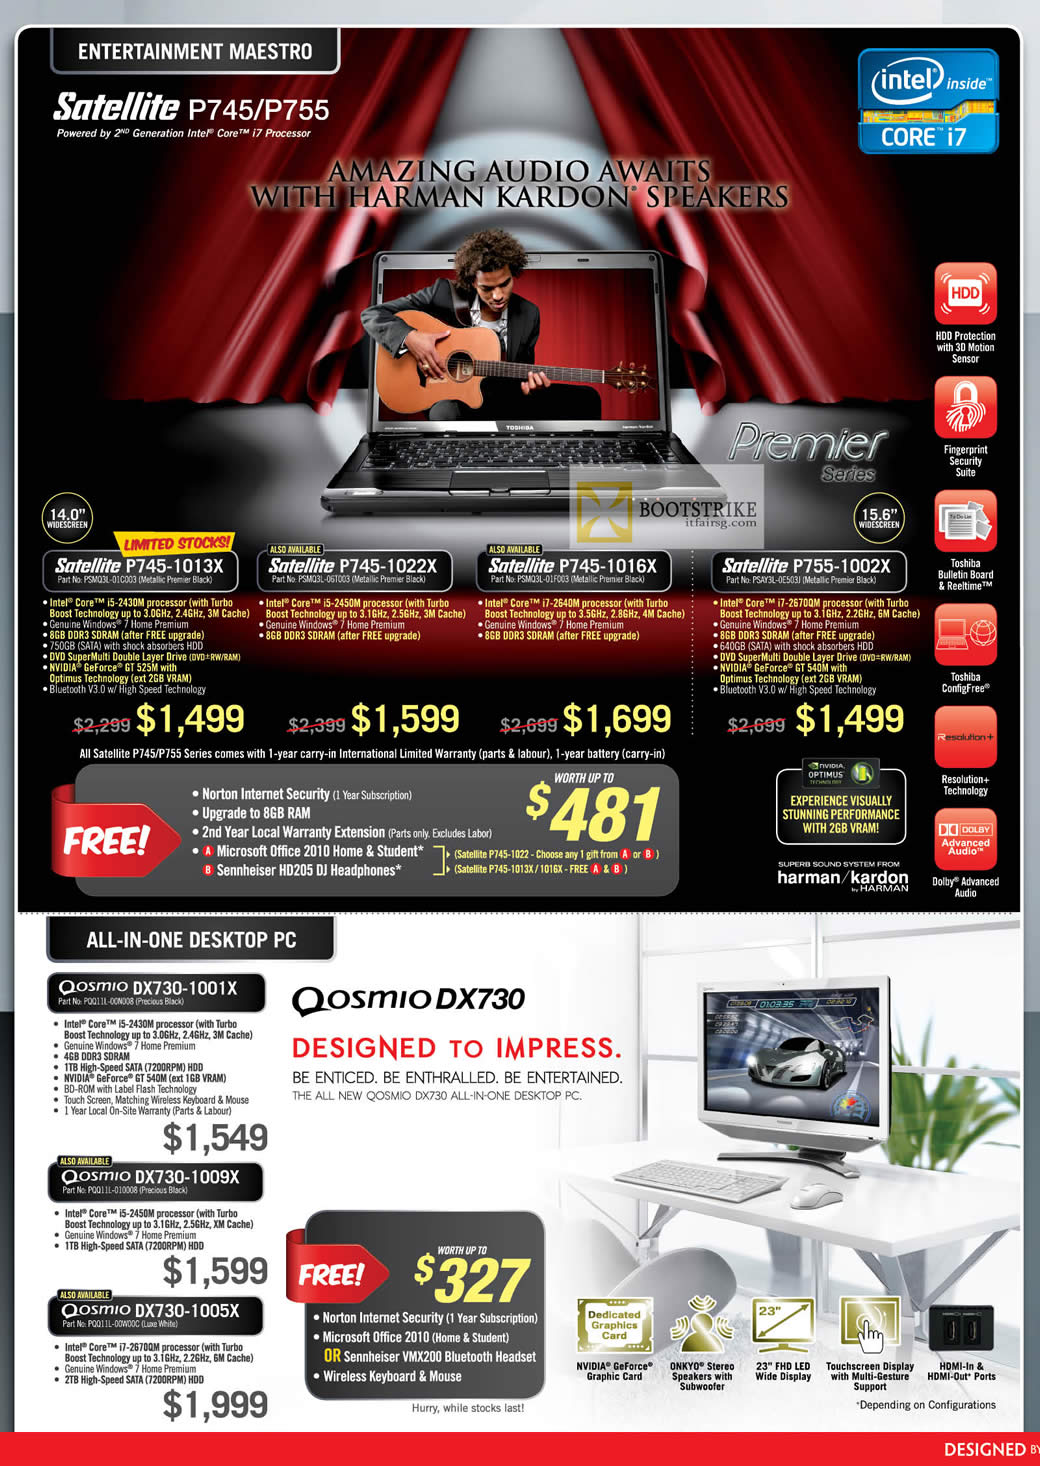 IT SHOW 2012 price list image brochure of Toshiba Notebooks Satellite P745-1013X, P745-1022X, P745-1016X, P755-1002X, Qosmio AIO Desktop PC Dx730-1001X, DX730-1009X, DX730-1005X